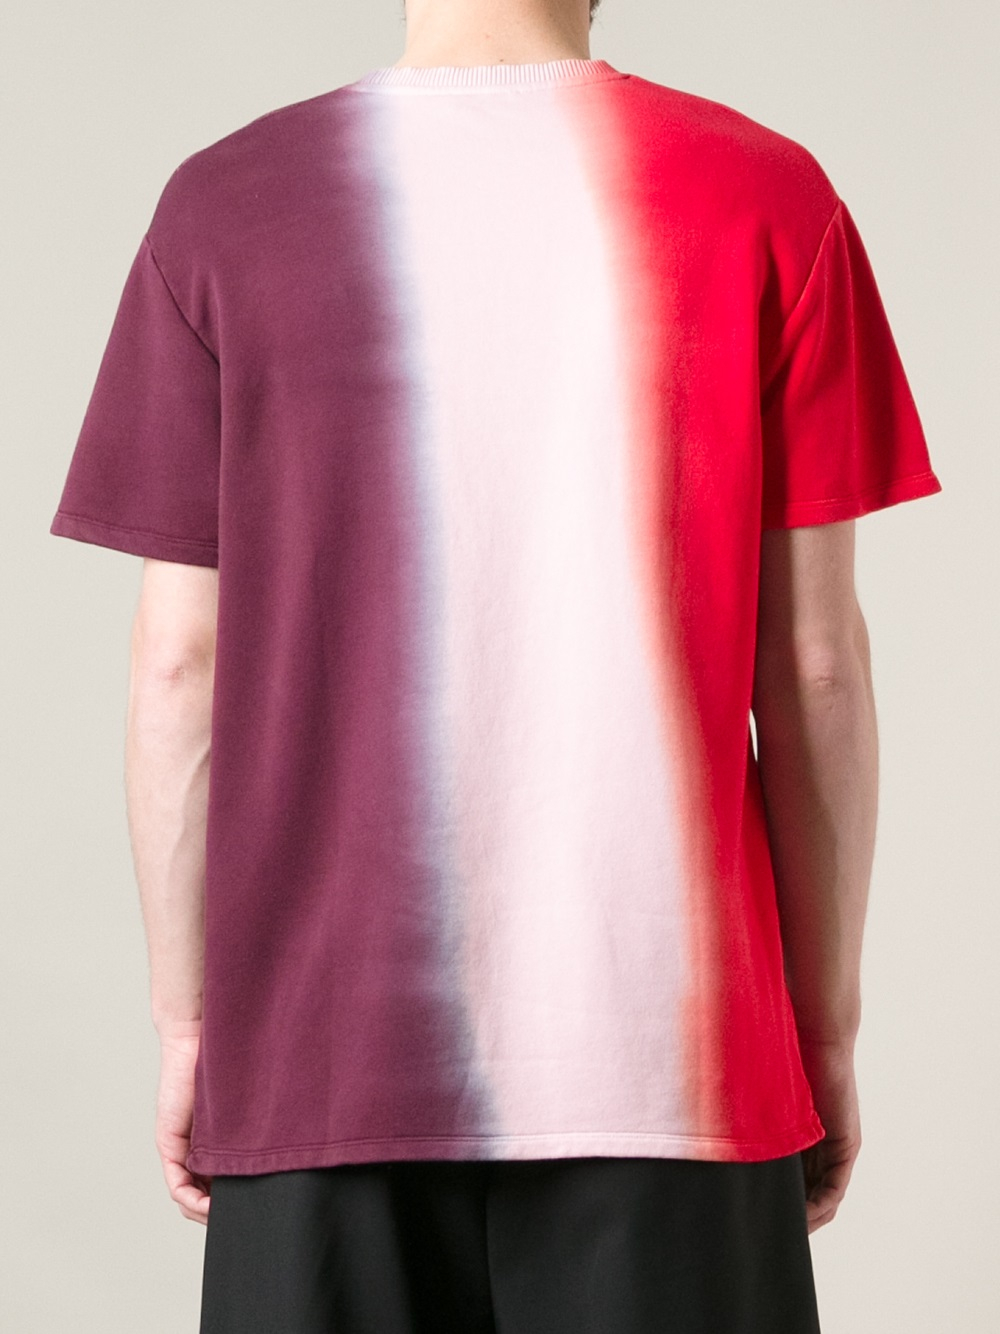 Raf Simons Dip Dye Tshirt in Red (Purple) for Men - Lyst